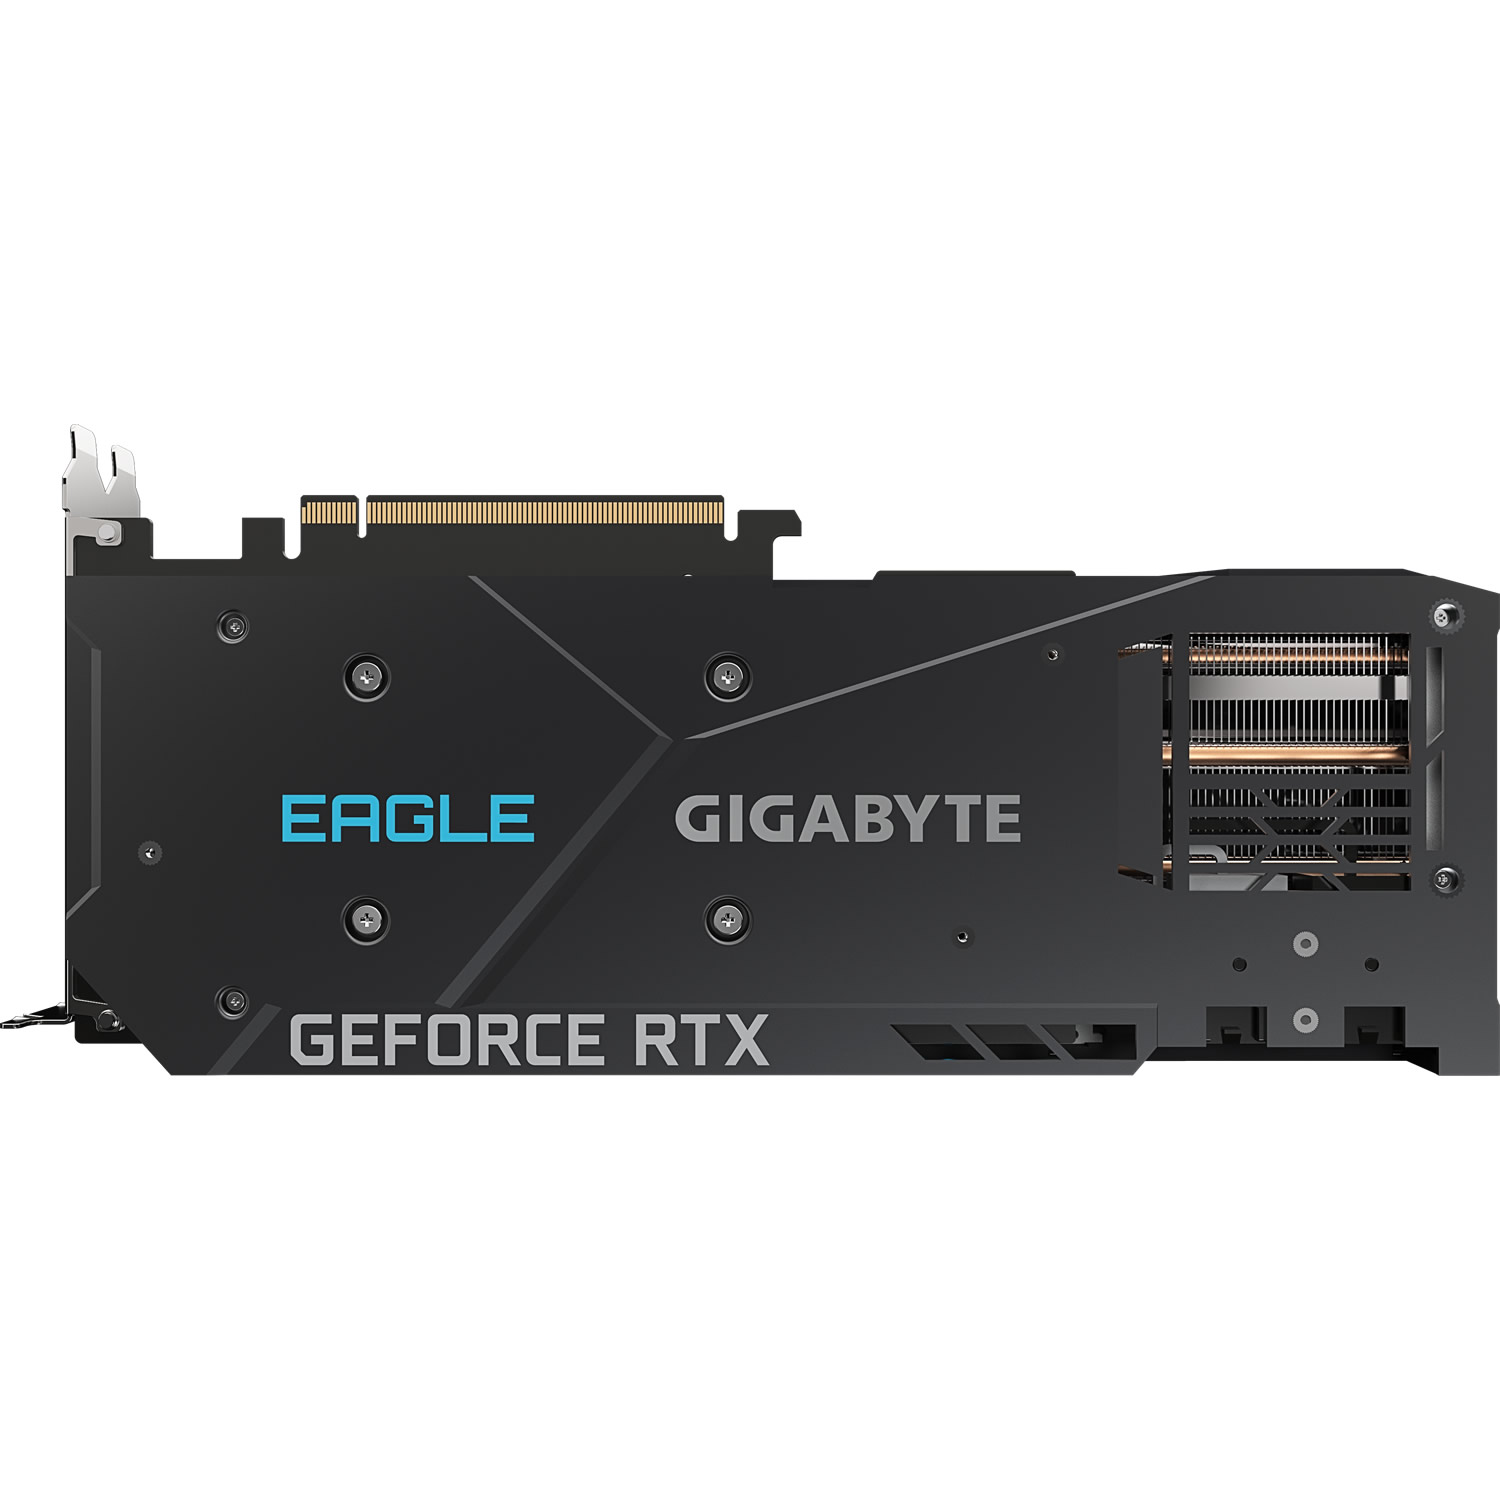 Gigabyte - Gigabyte GeForce RTX 3070 Eagle OC 8GB GDDR6 PCI-Express Graphics Card